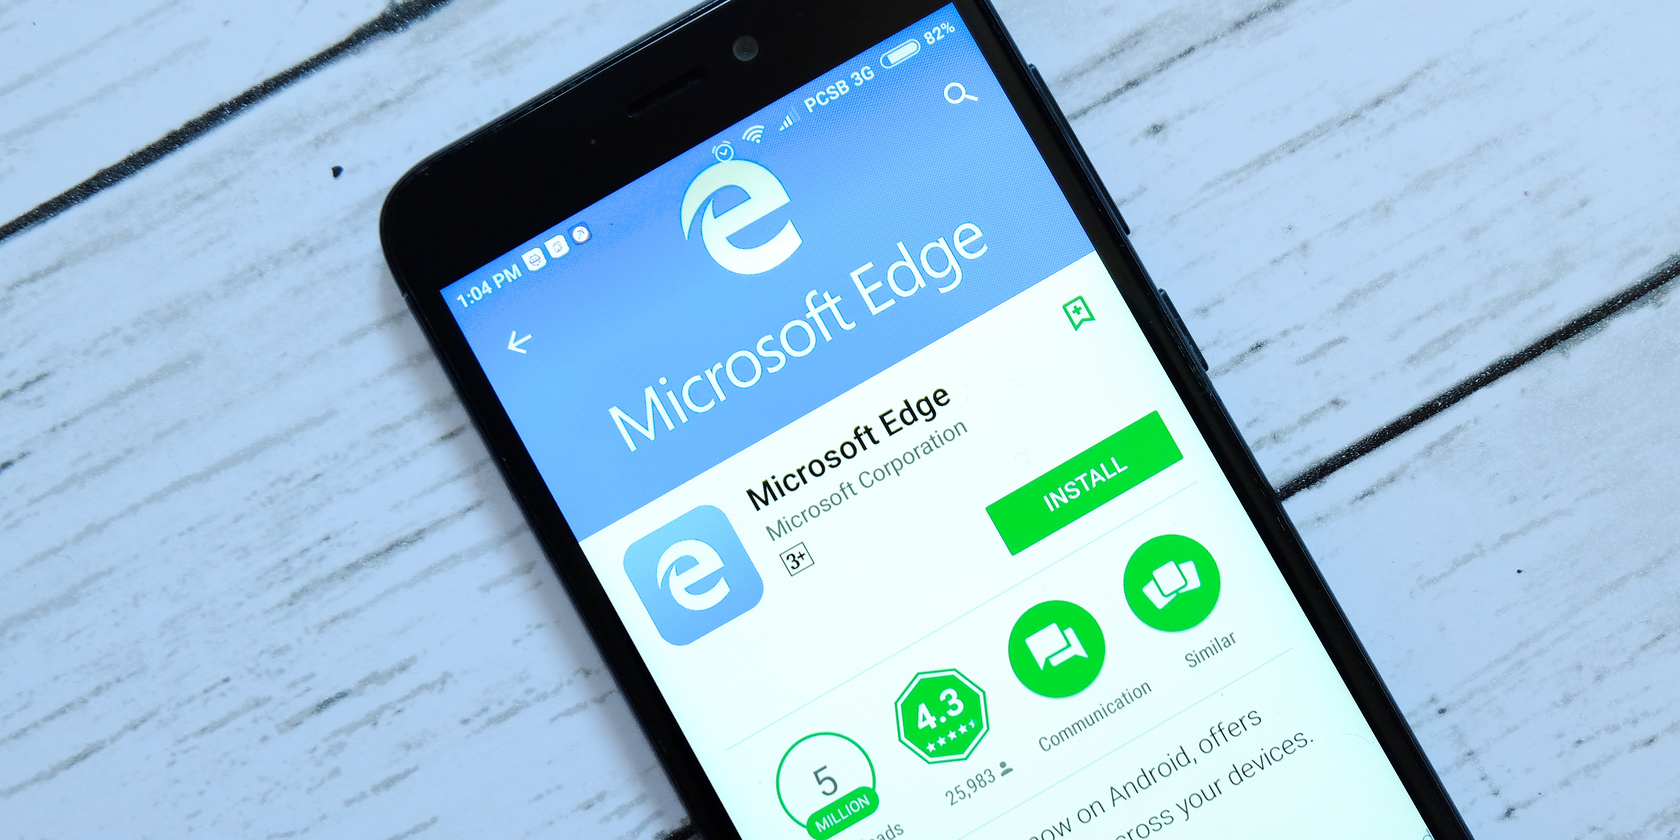 Microsoft Edge on mobile